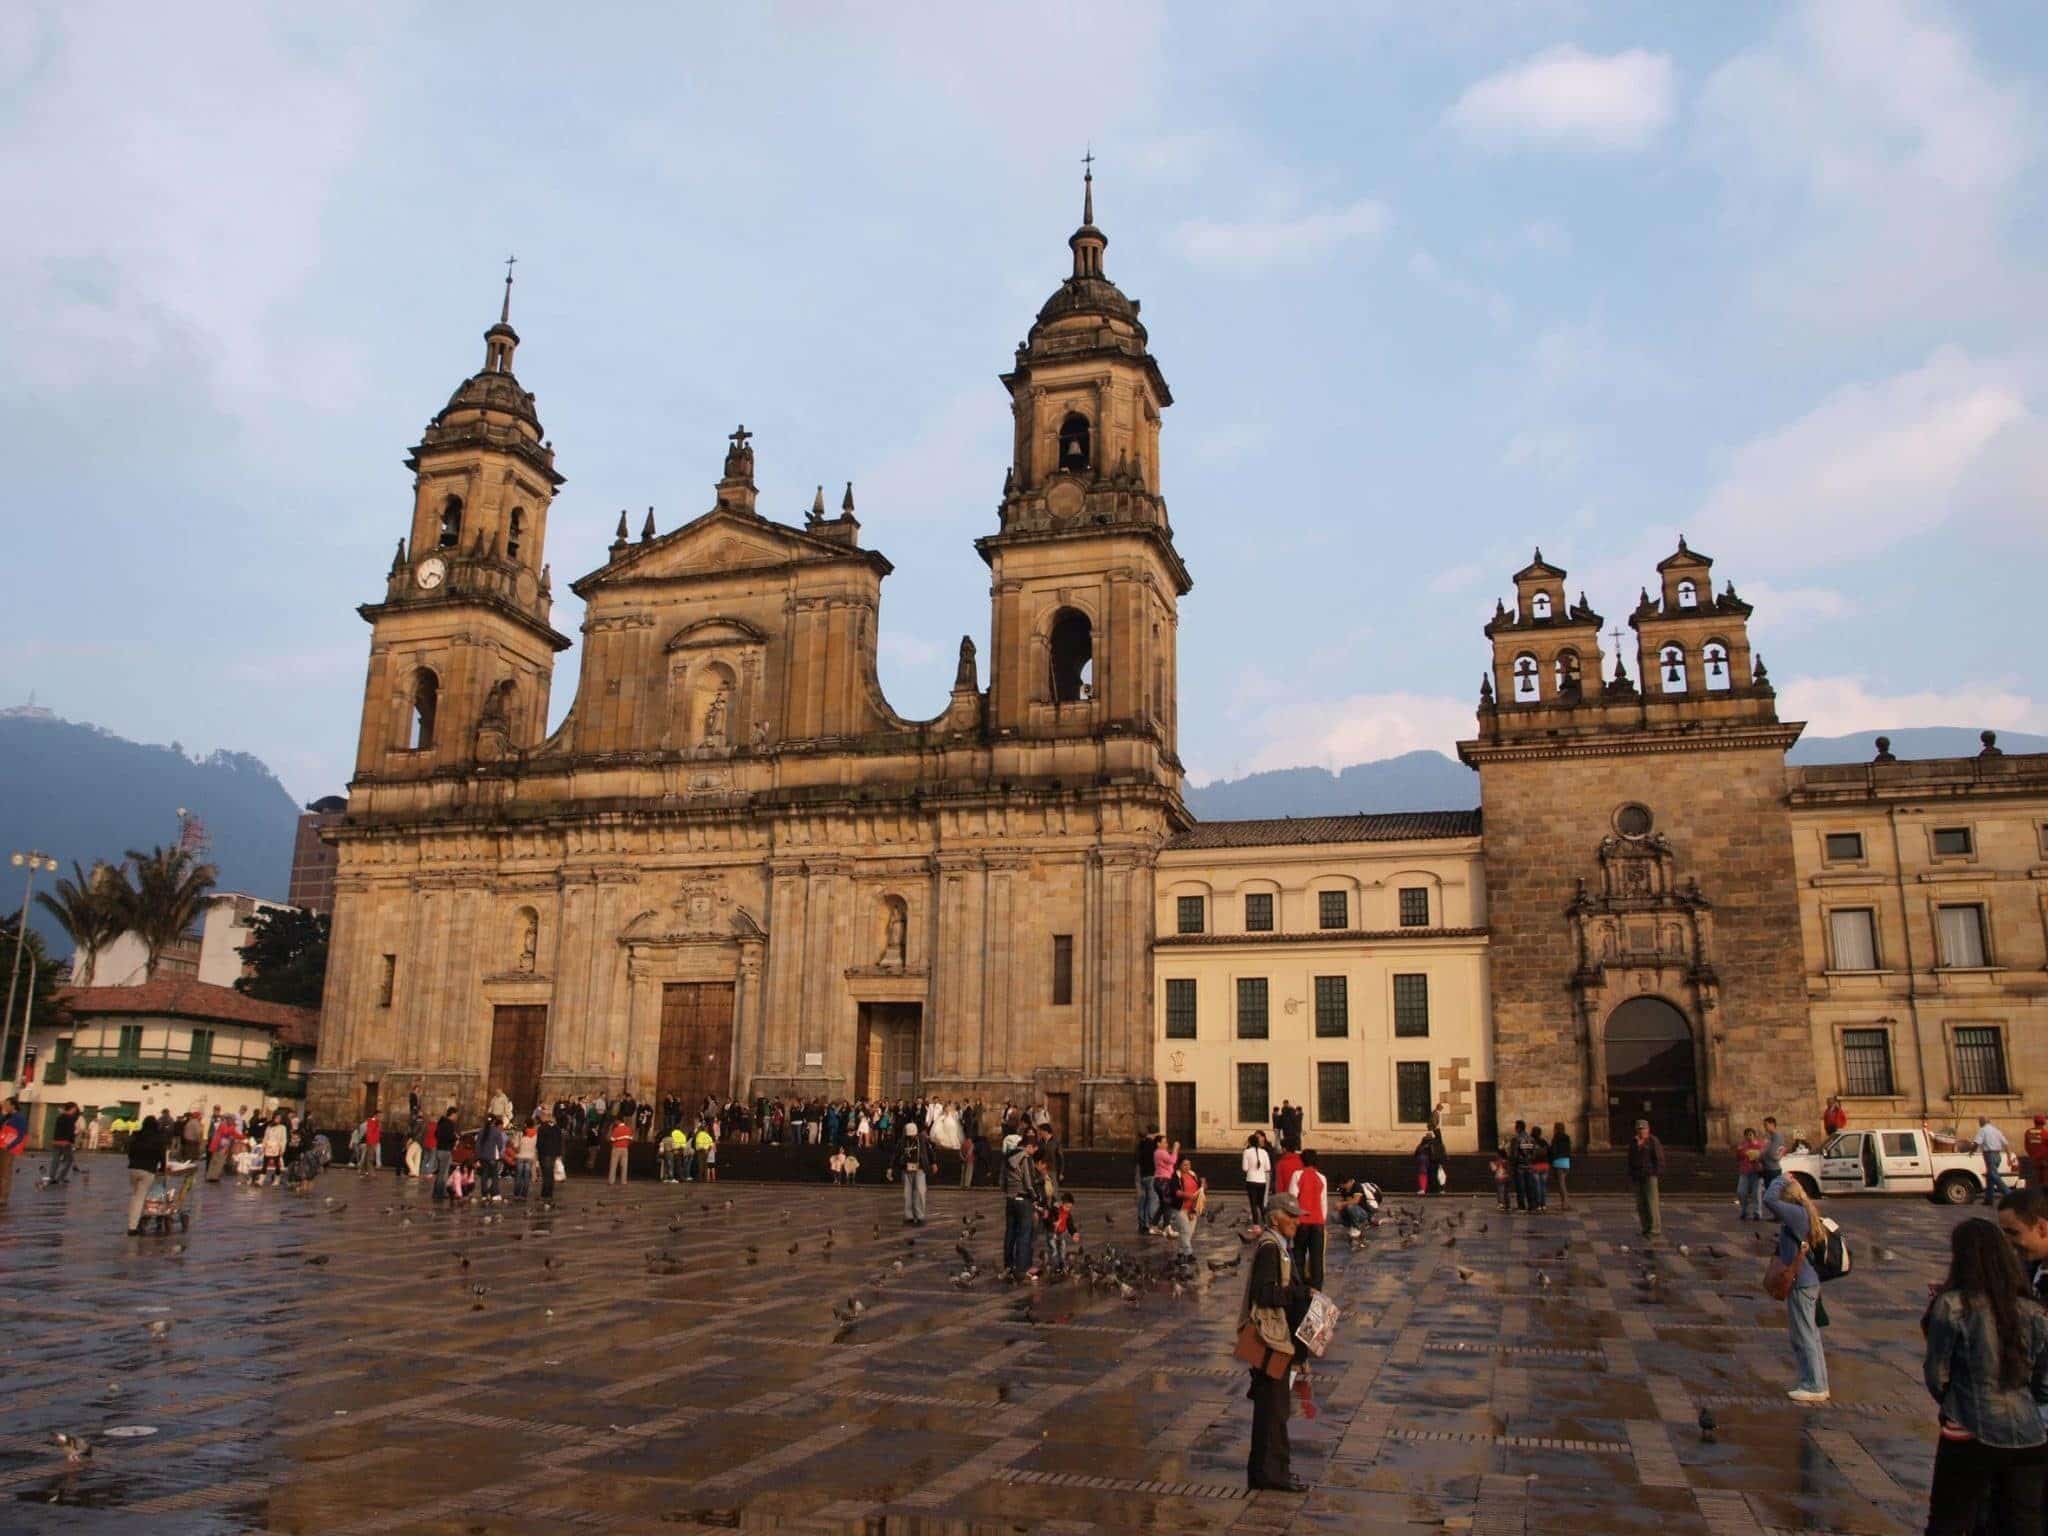 Plaza de la catedral Bogotà - Photo by layoverguide.com